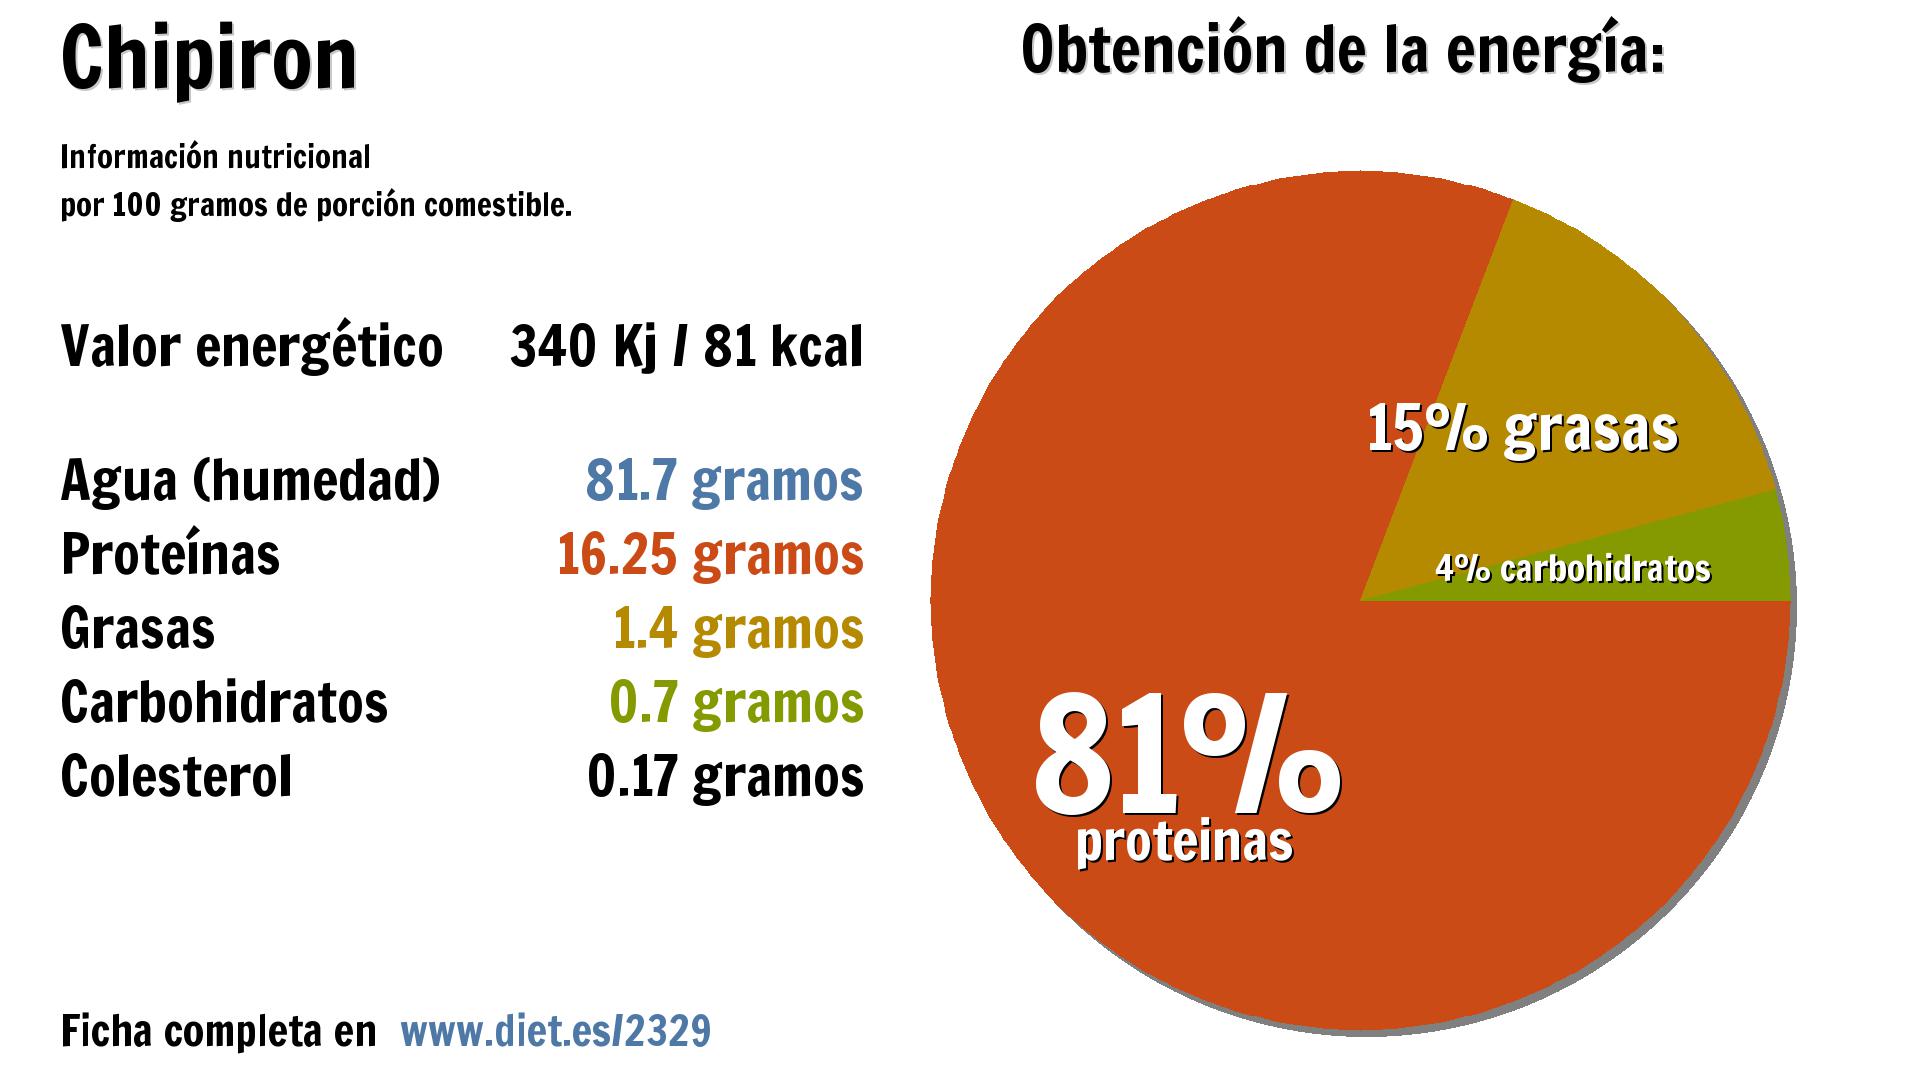 Chipiron: energía 340 Kj, agua 82 g., proteínas 16 g., grasas 1 g. y carbohidratos 1 g.